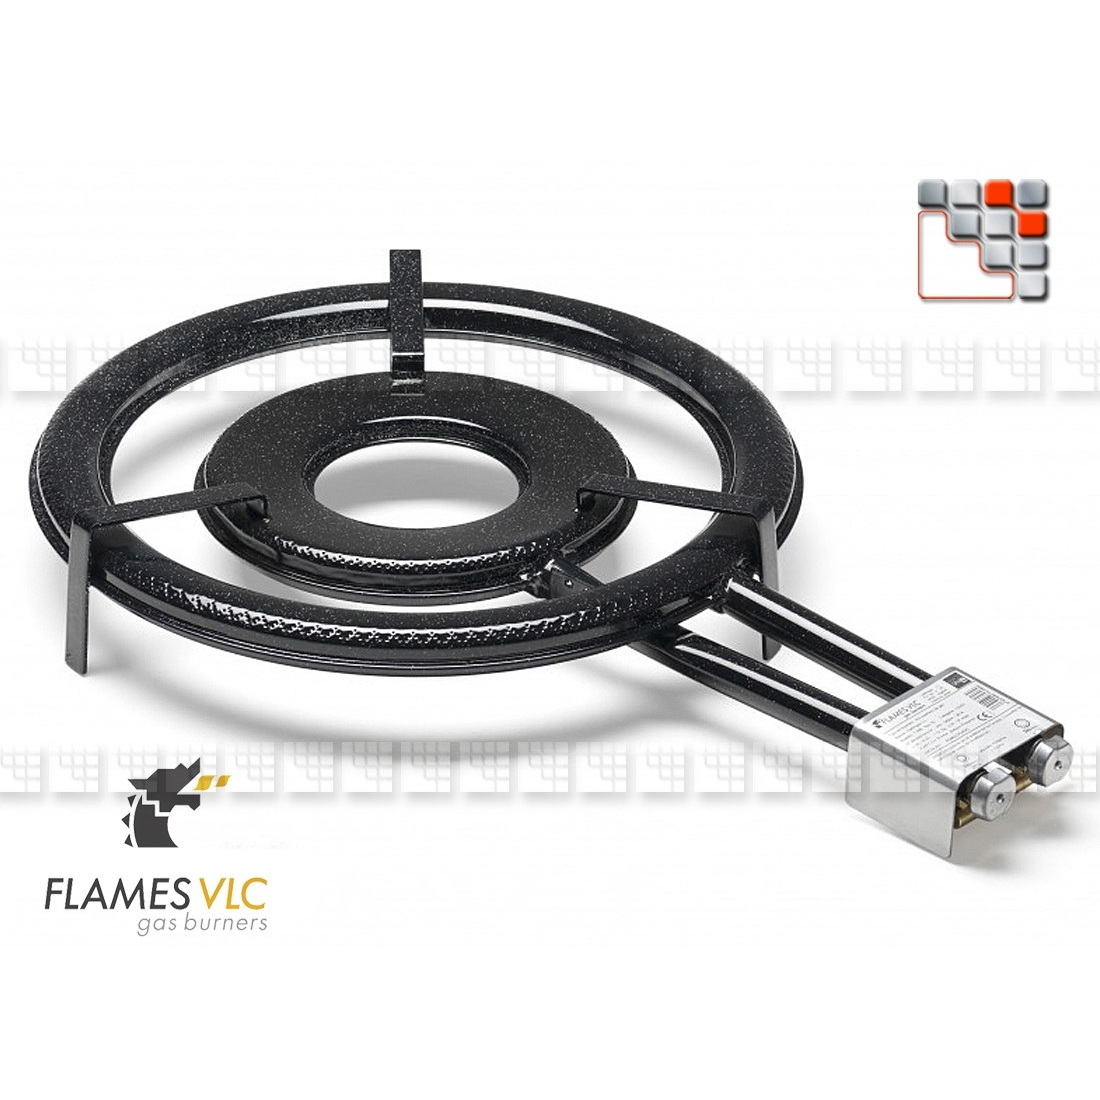 Gas Burner T-500BFR VLC F08-T500 FL AMES VLC® Gas Burner Flames VLC